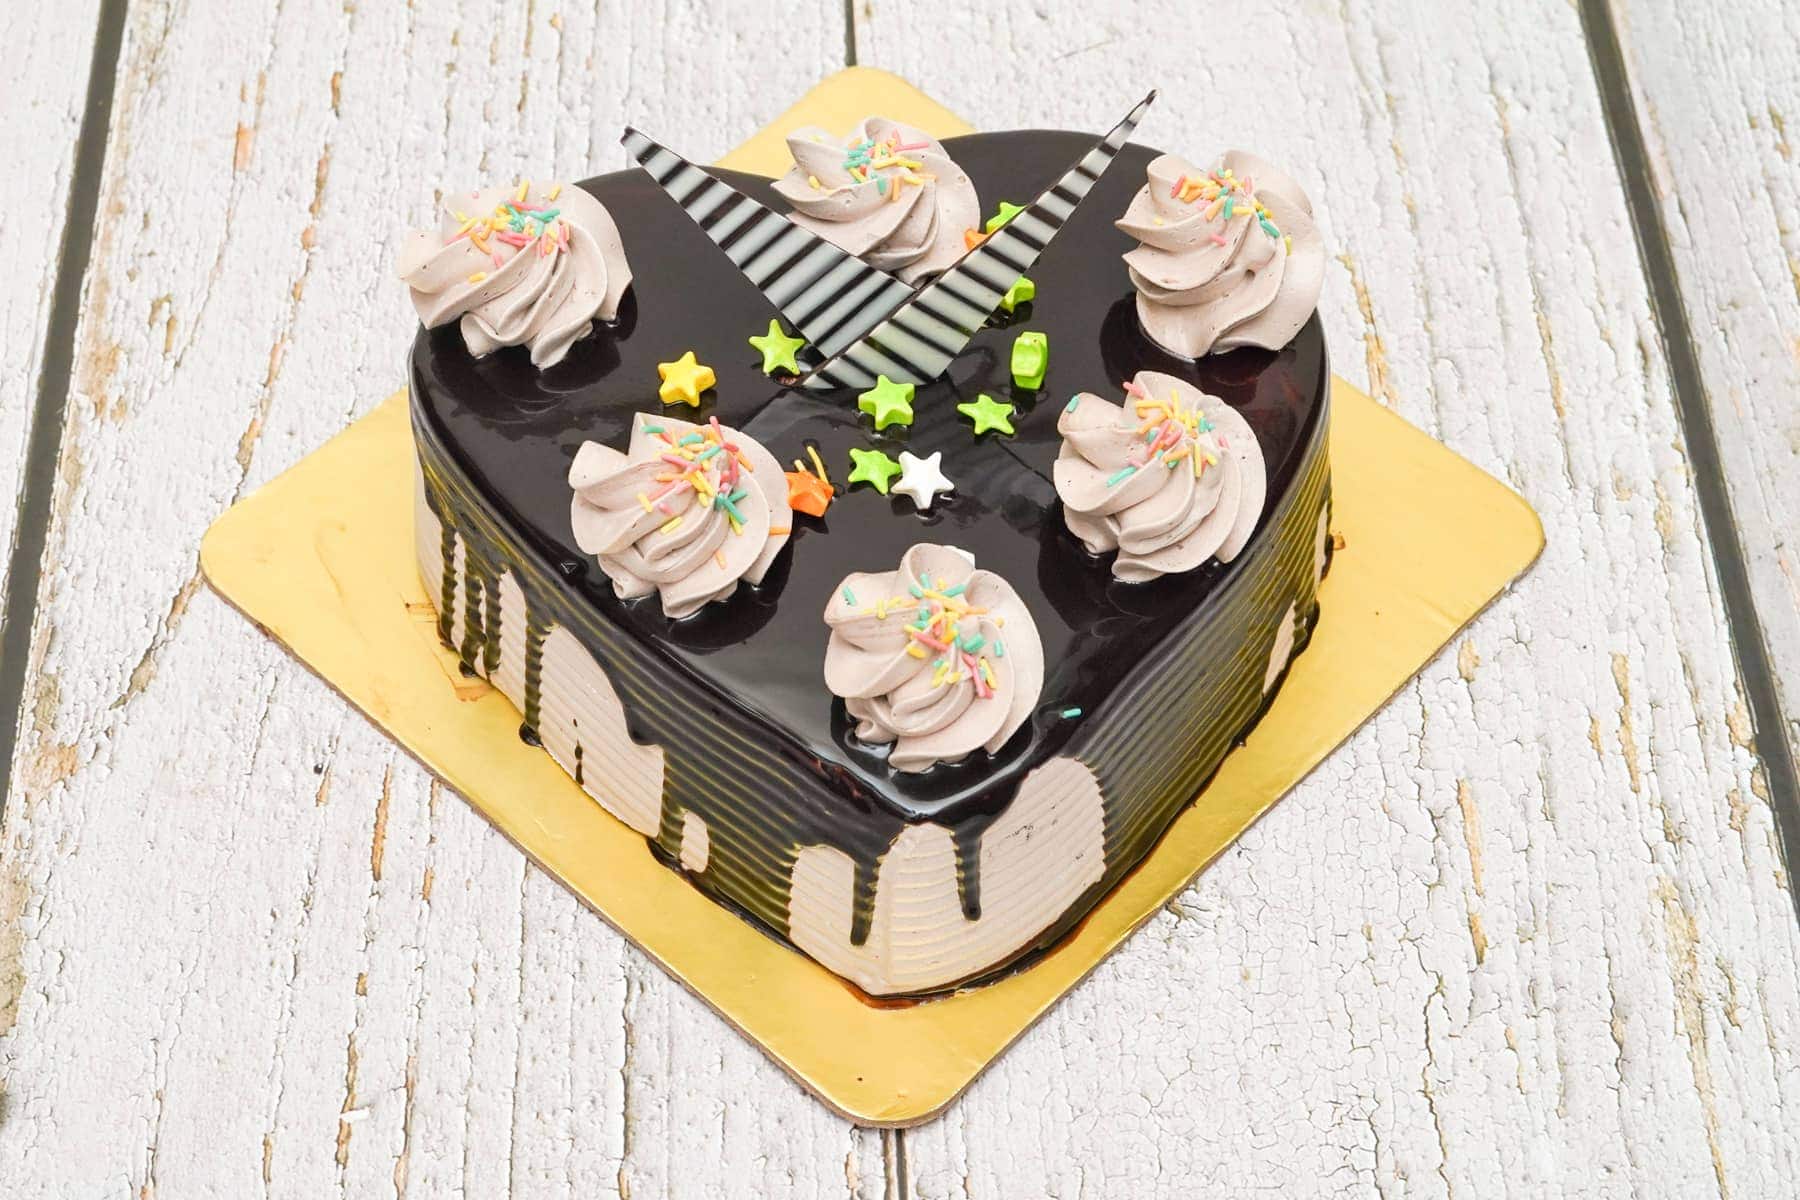 Happy Birthday Bhushan Cakes, Cards, Wishes | Happy birthday cake pictures,  Happy birthday cake photo, Happy birthday cakes